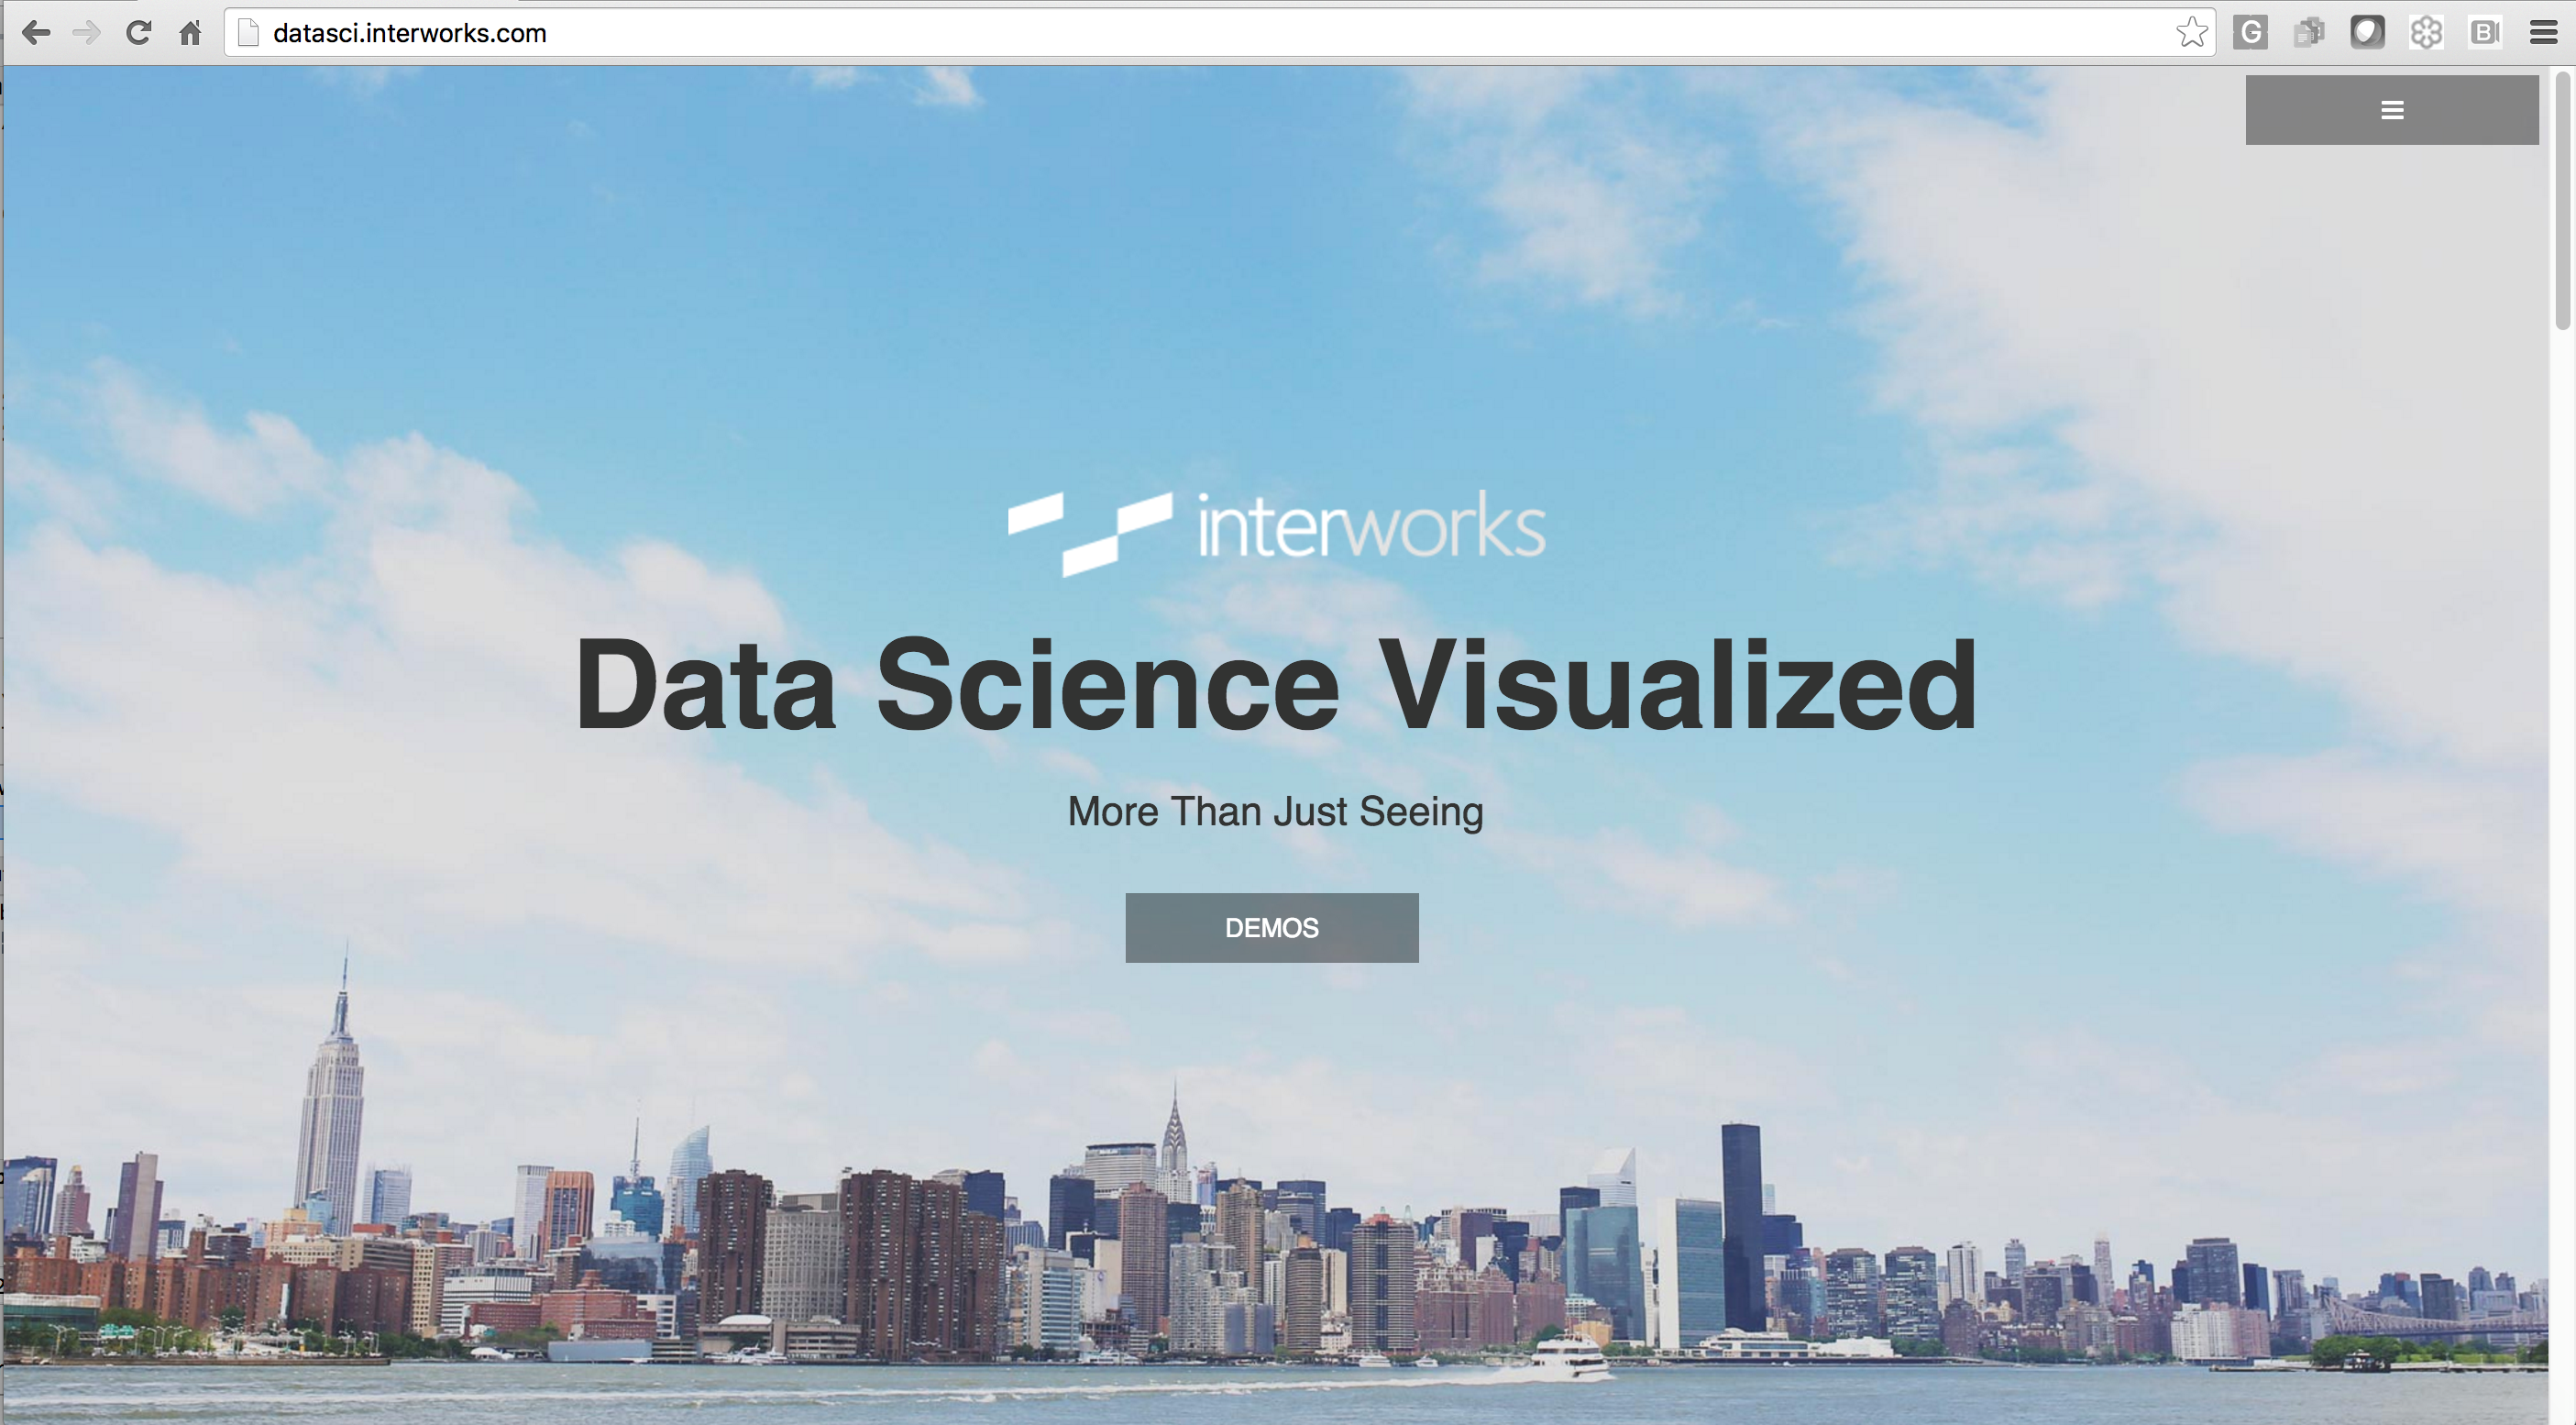 InterWorks' Data Science Portal